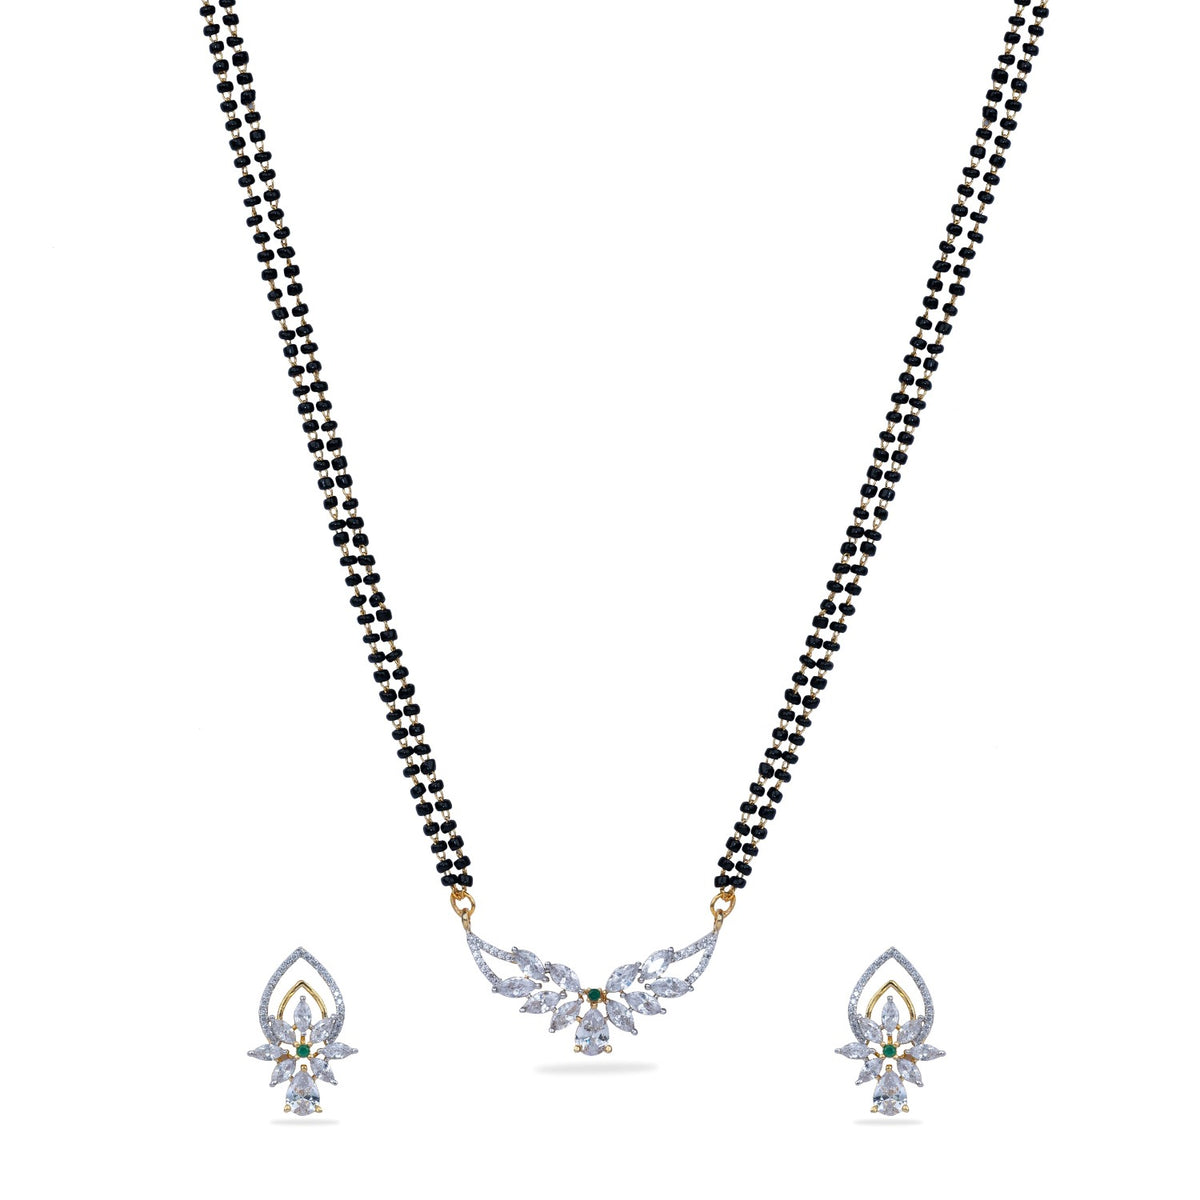 Shreeya CZ White Green Black Beads Necklace Set